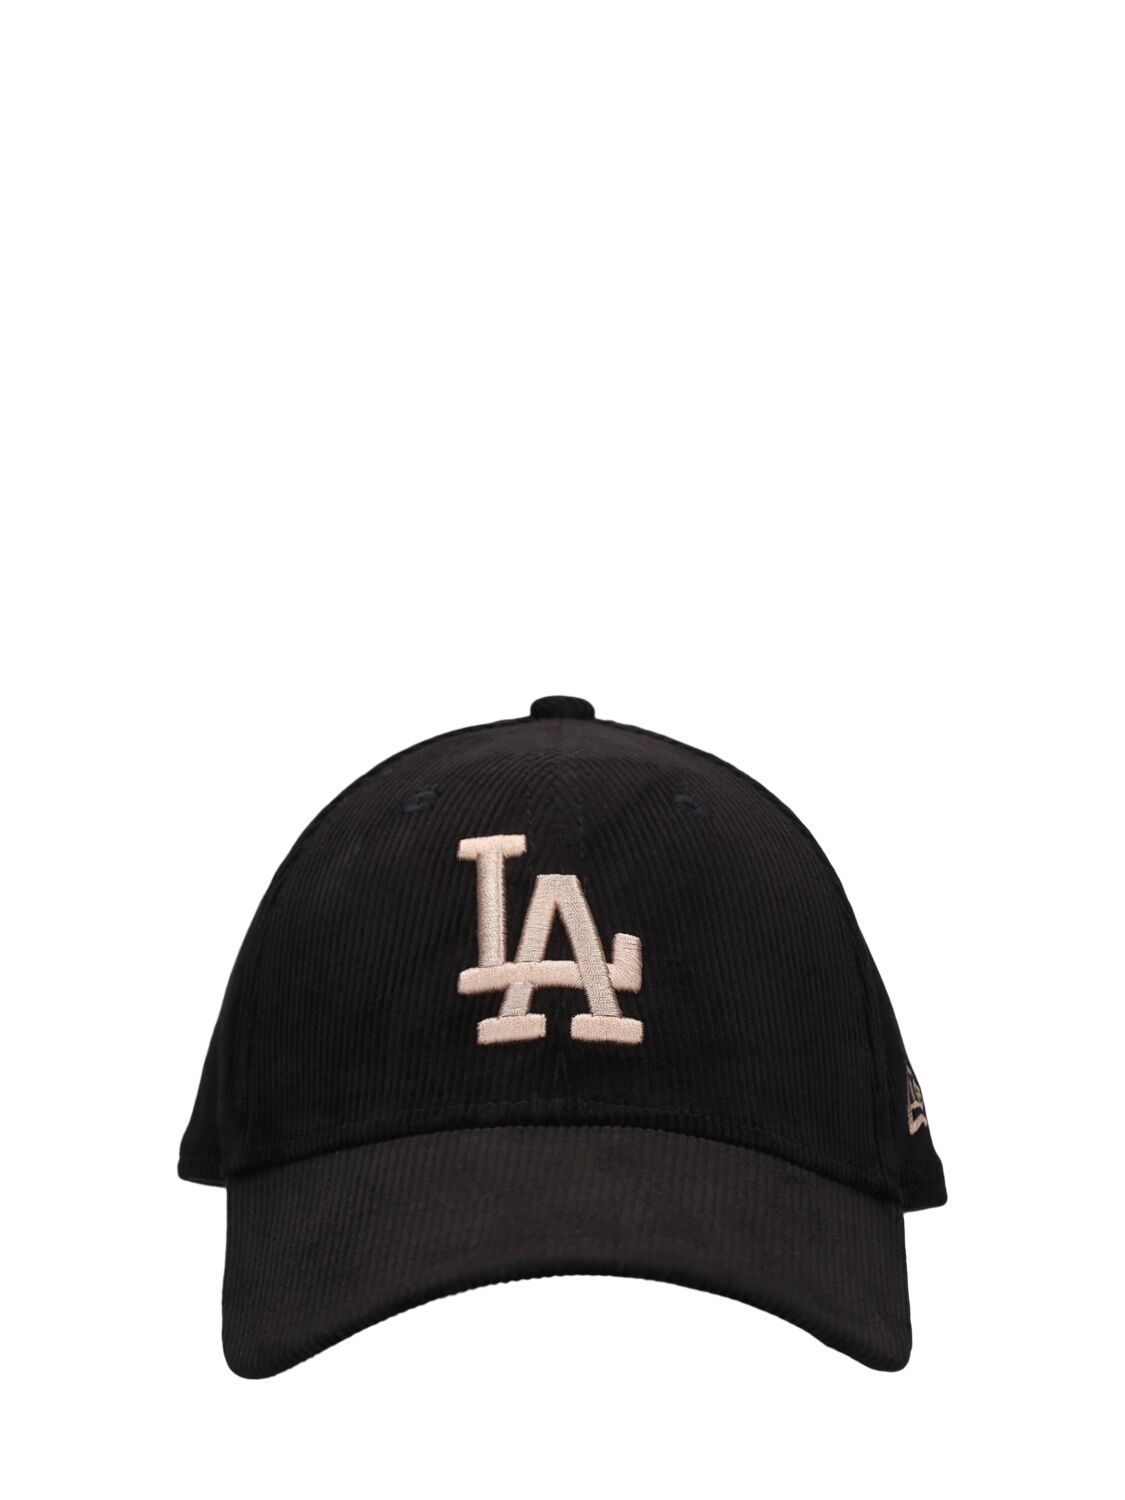 New Era La Dodgers 9forty棒球帽 In Black,beige